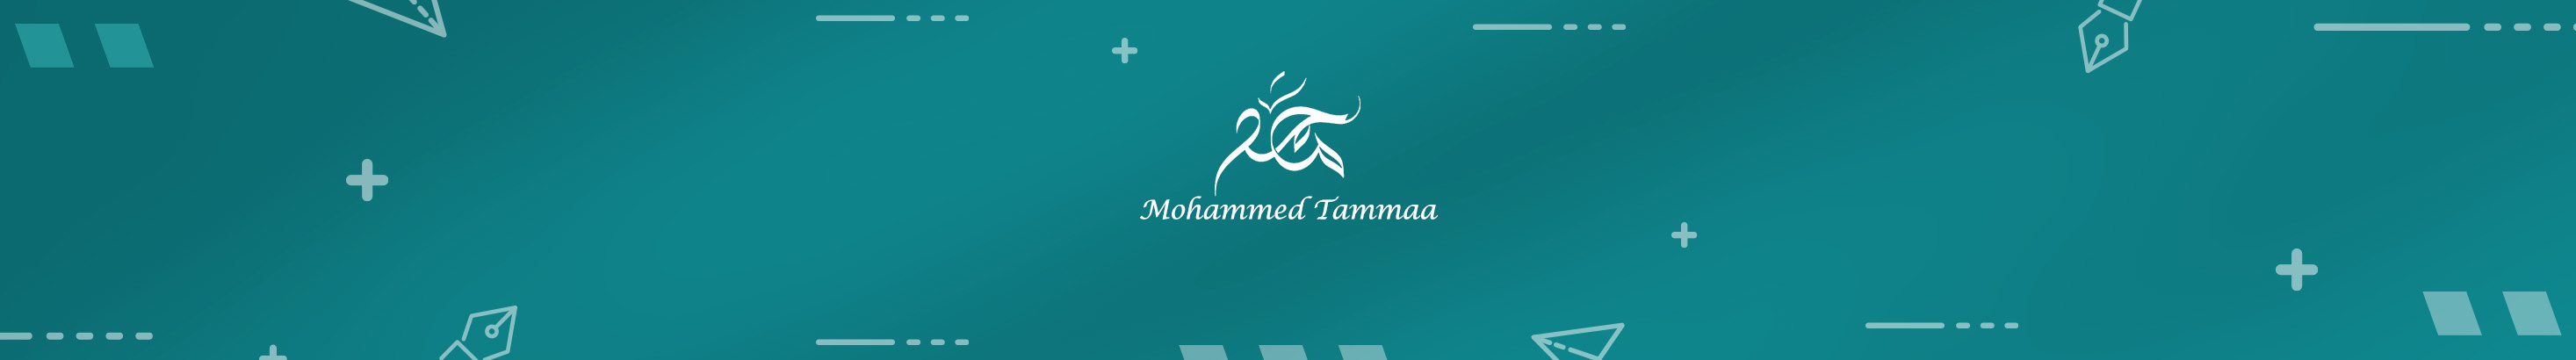 Mohammed Tammaa 的个人资料横幅